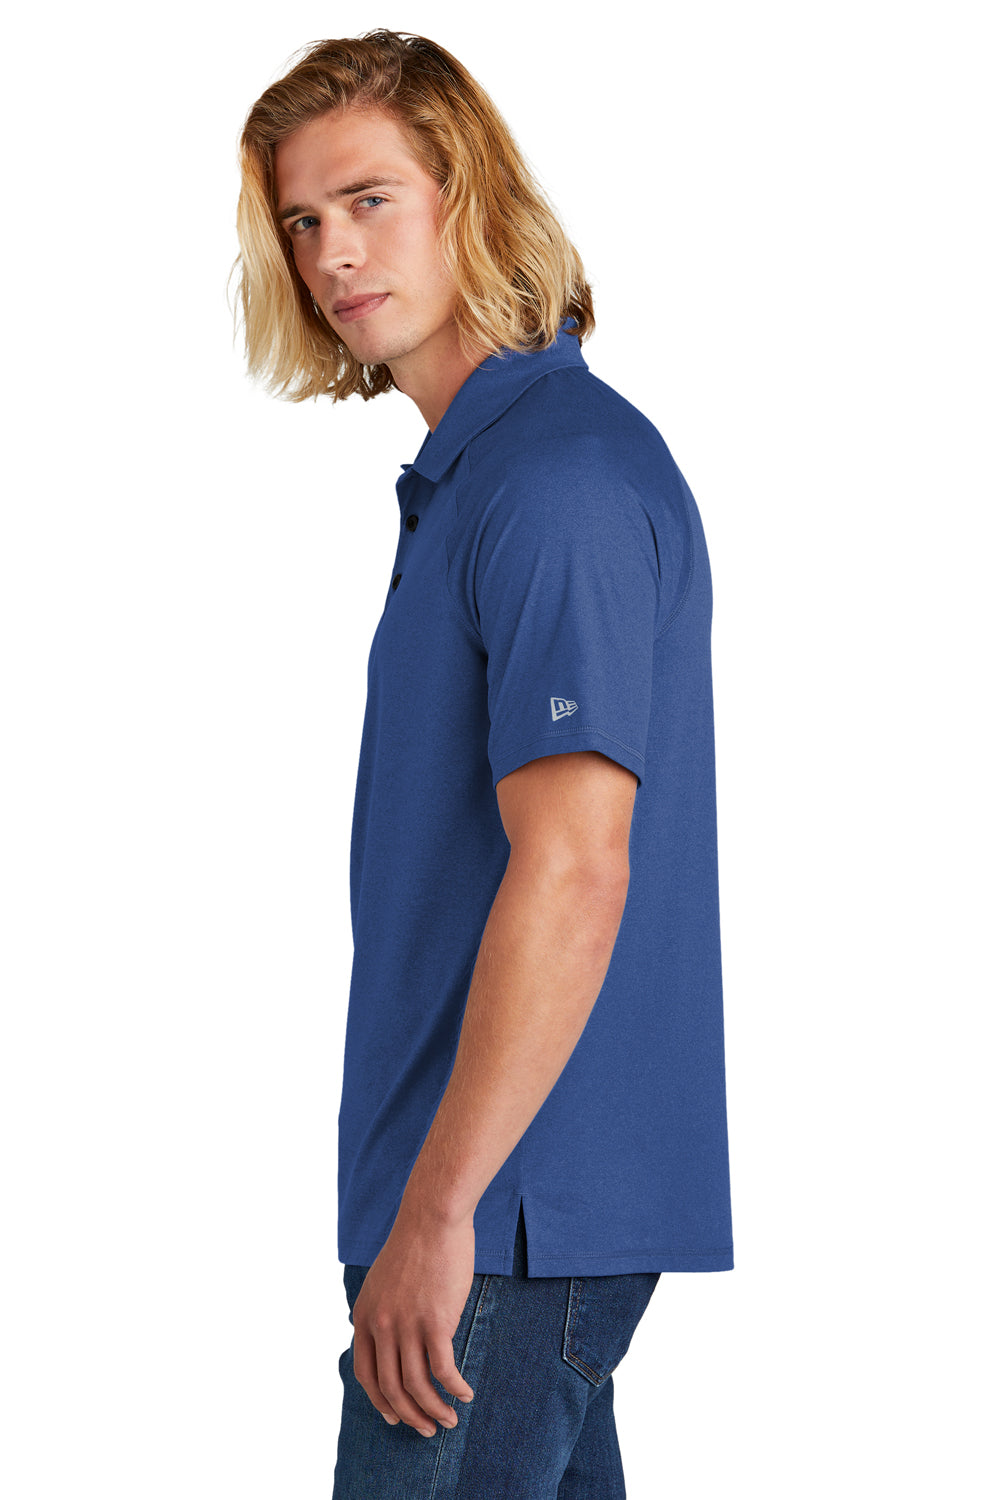 New Era Mens Power Short Sleeve Polo Shirt Heather Royal Blue Side